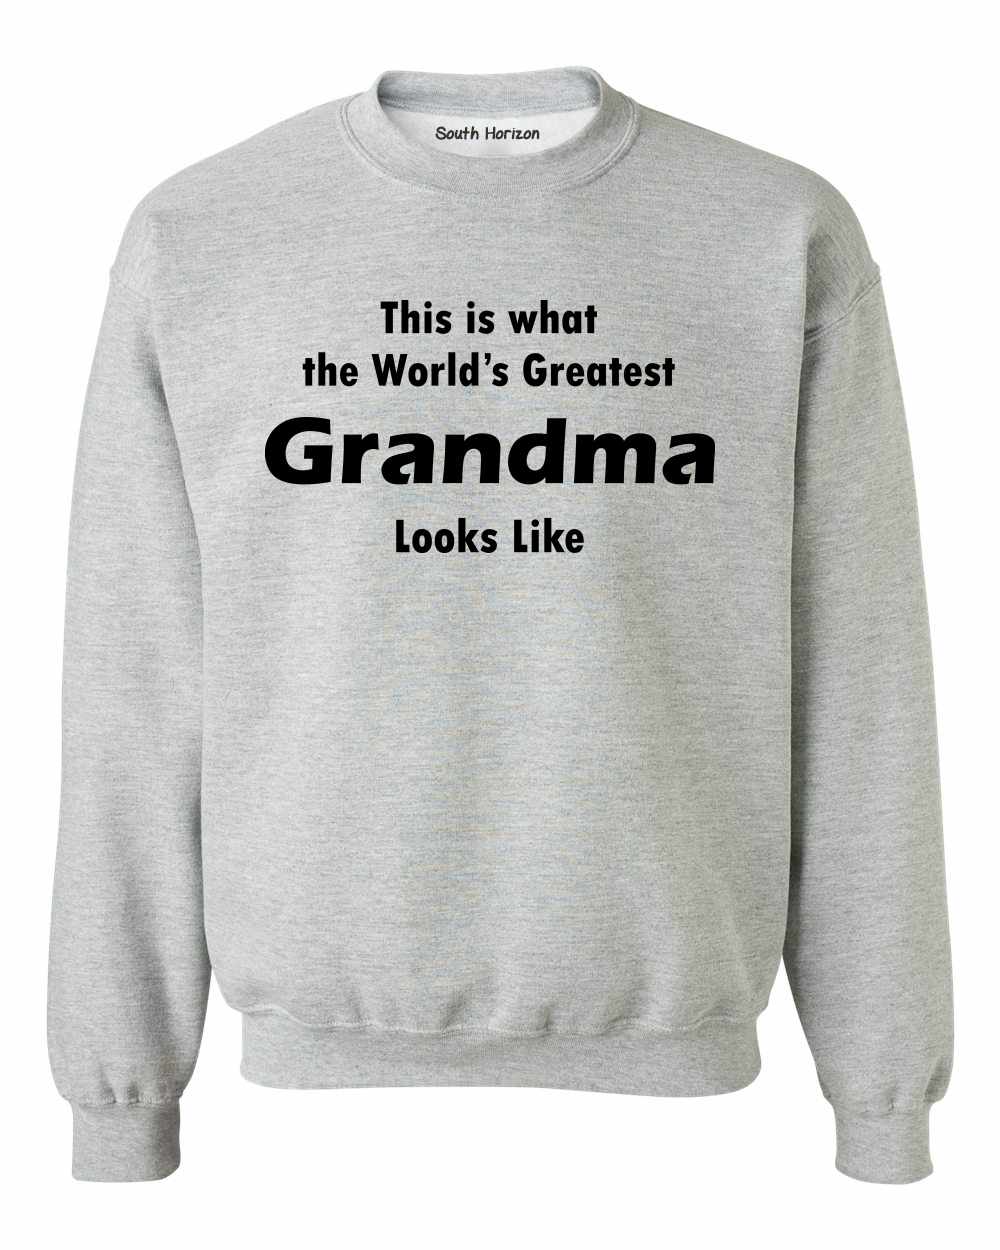 This is what the World's Greatest Grandma Looks Like on SweatShirt (#761-11)